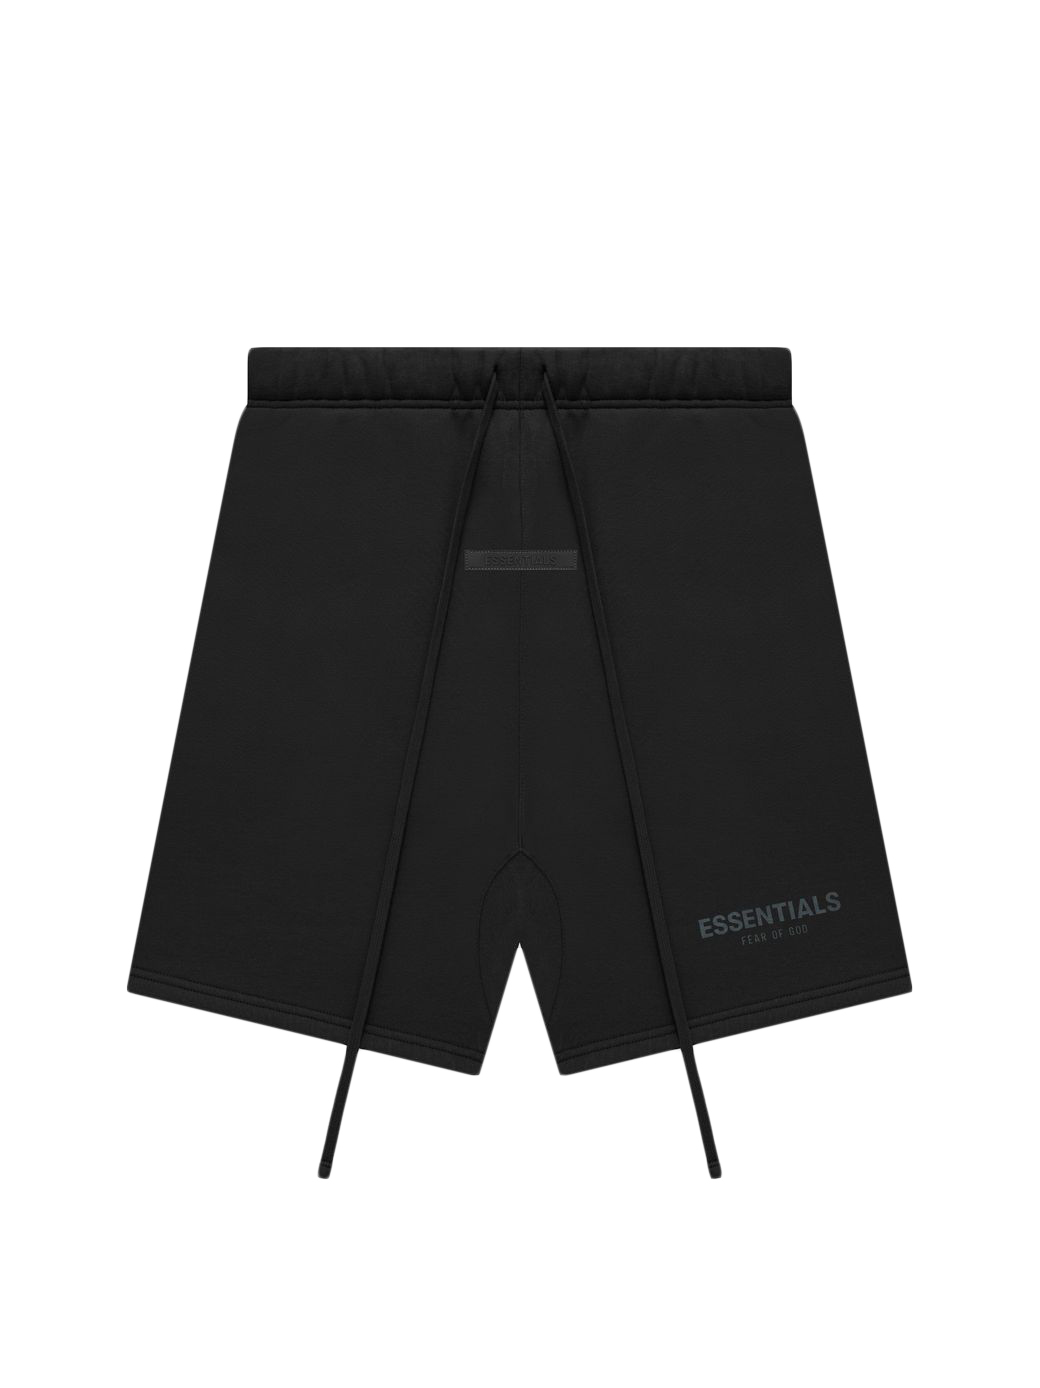 Buy & Sell Essentials Shorts Streetwear Apparel